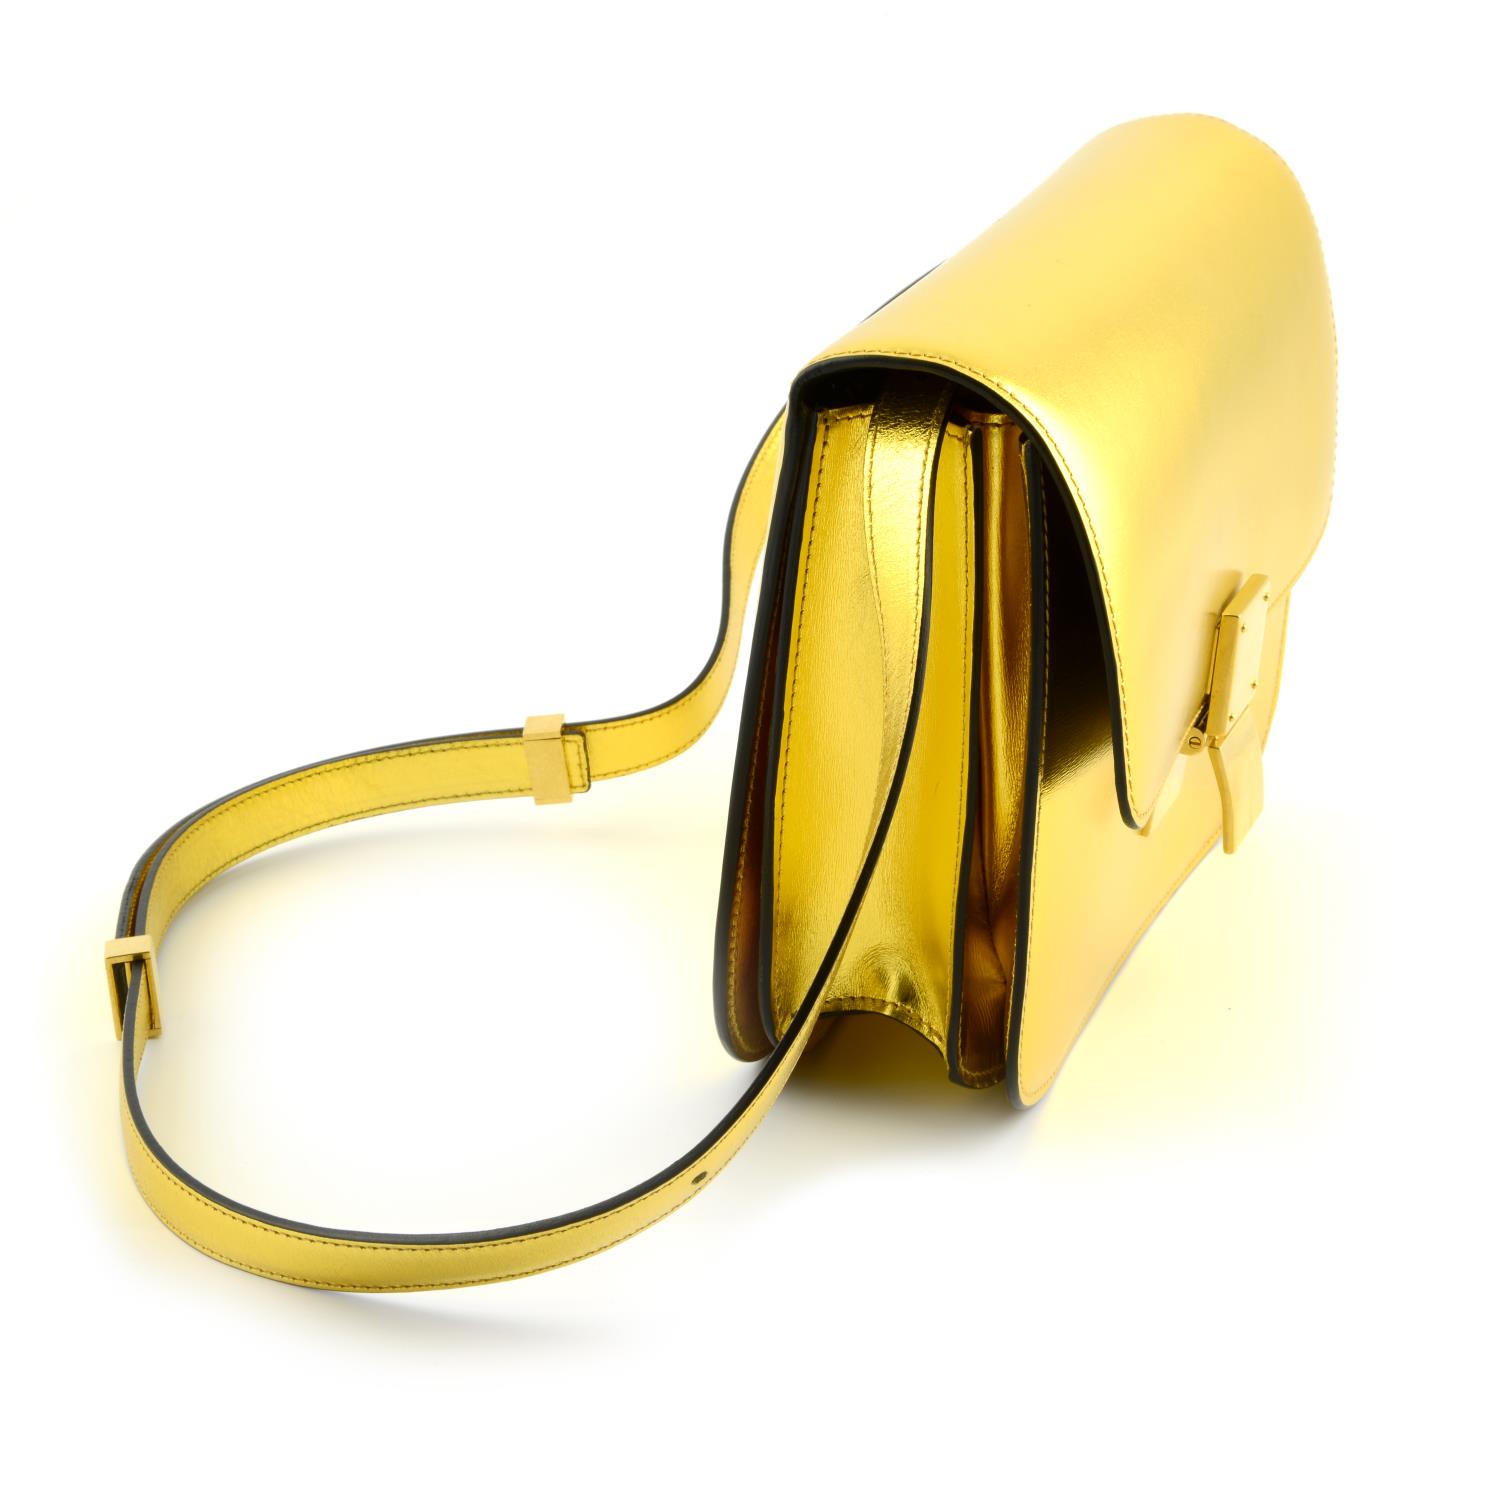 CÉLINE - a metallic gold Box handbag. - Image 4 of 9